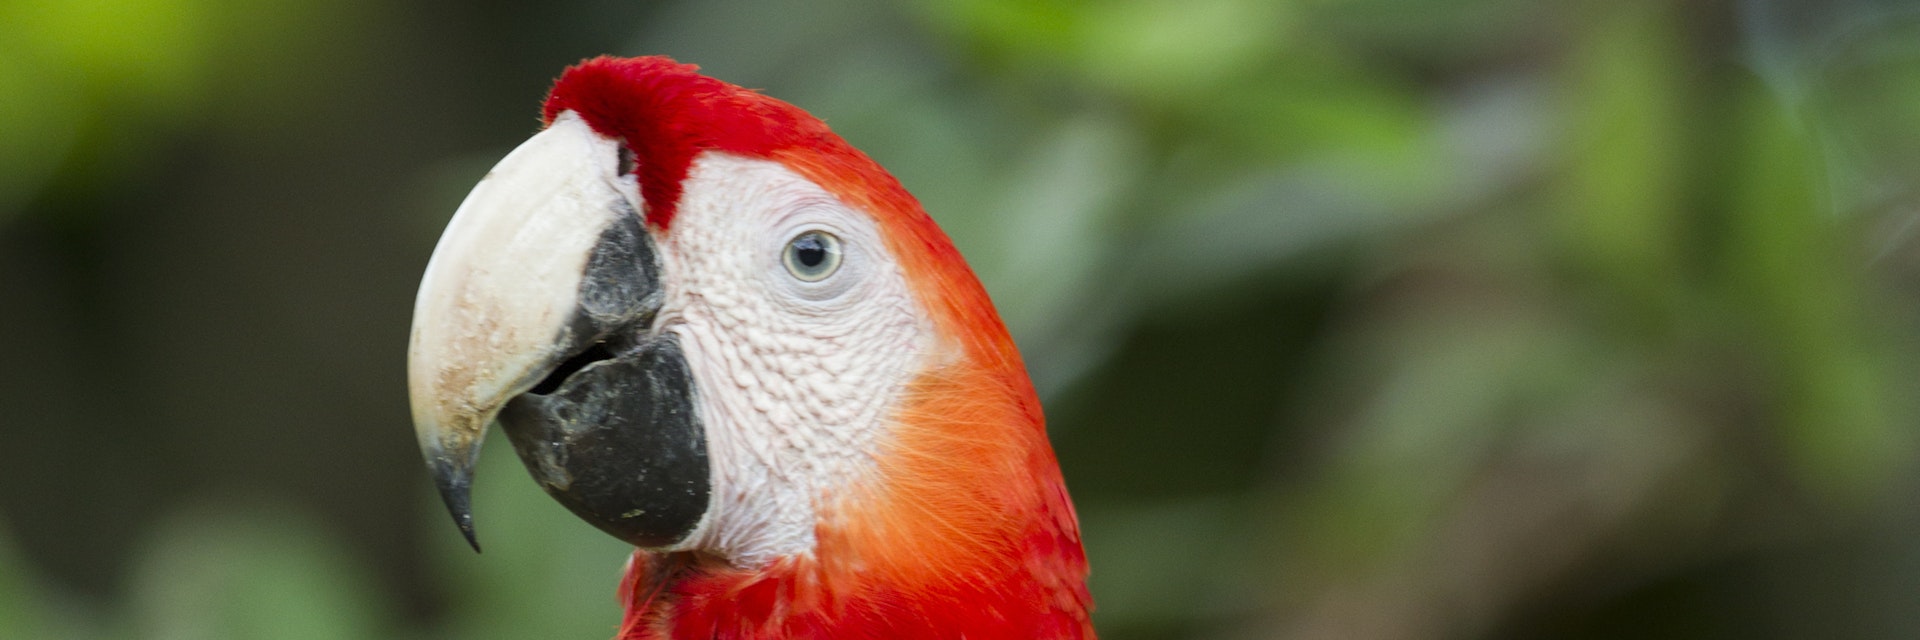 Scarlet Macaw, Costa Rica